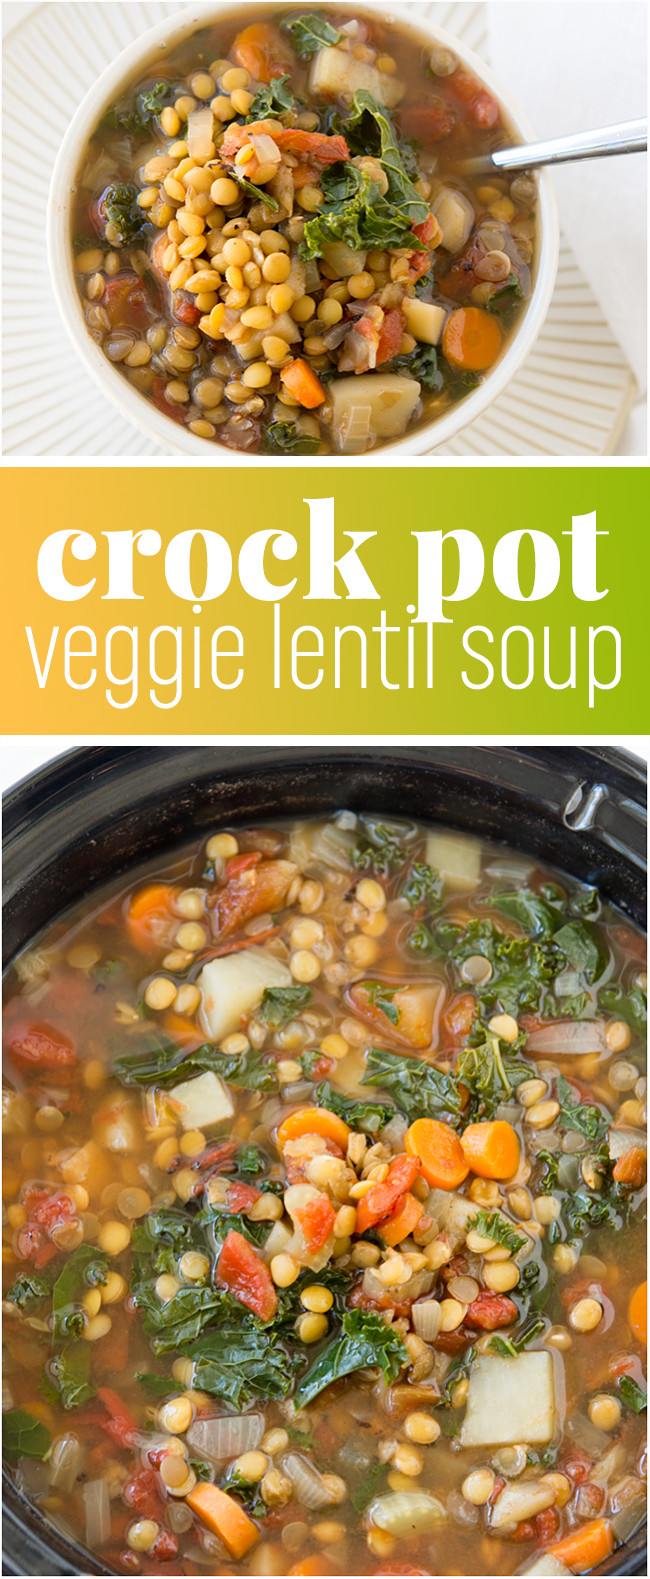 Crockpot Plant Based Recipes
 Crock Pot Ve able Lentil Soup Recipe